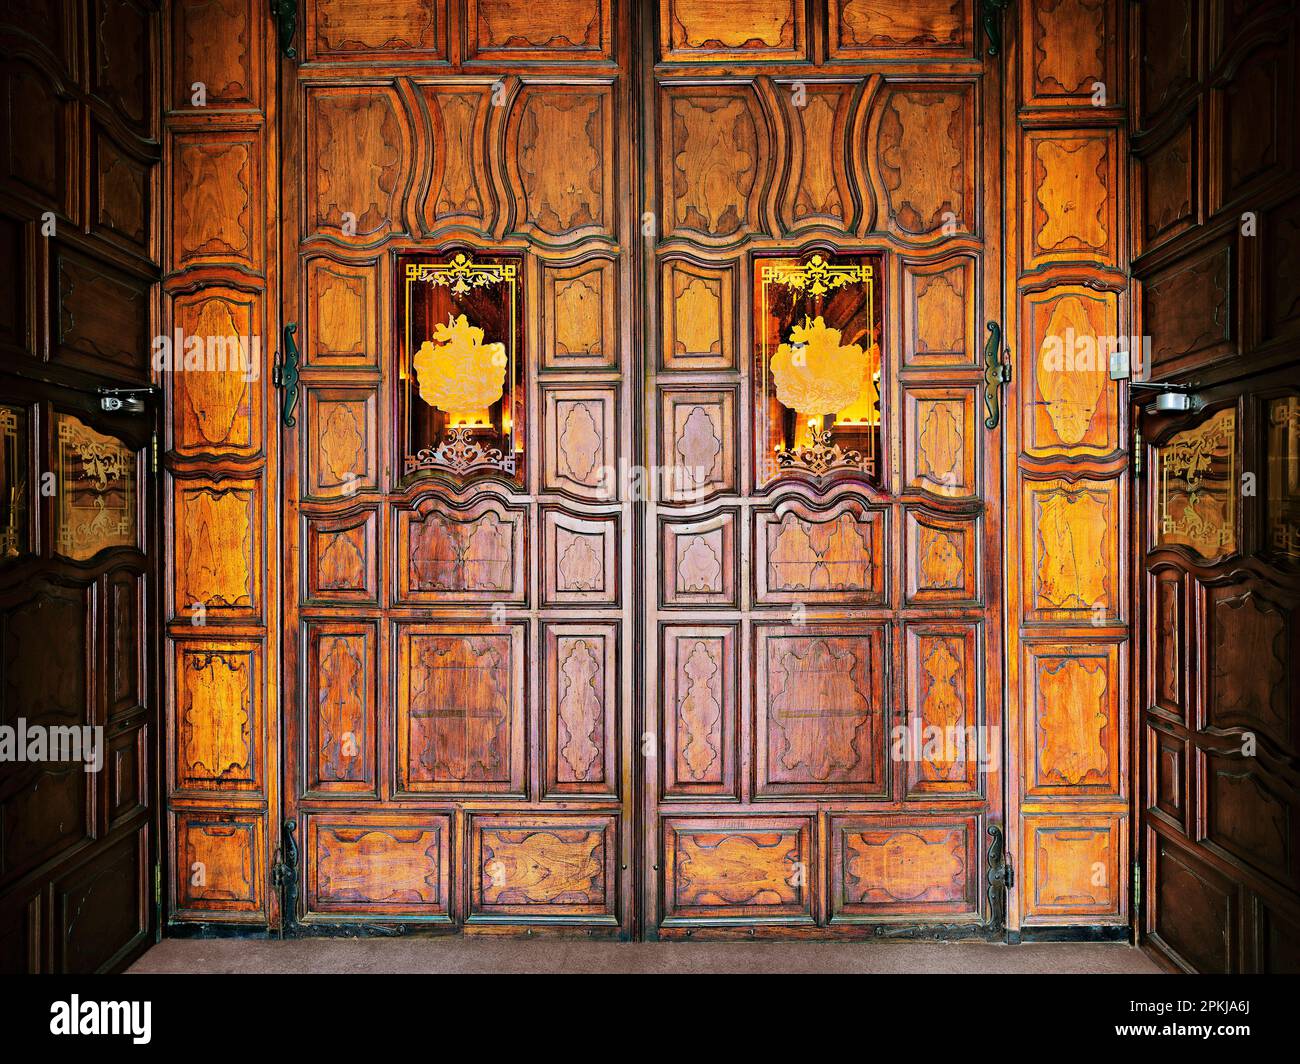 Portal of the Church of St. George, A Coruna, Galicia, Spain Stock Photo